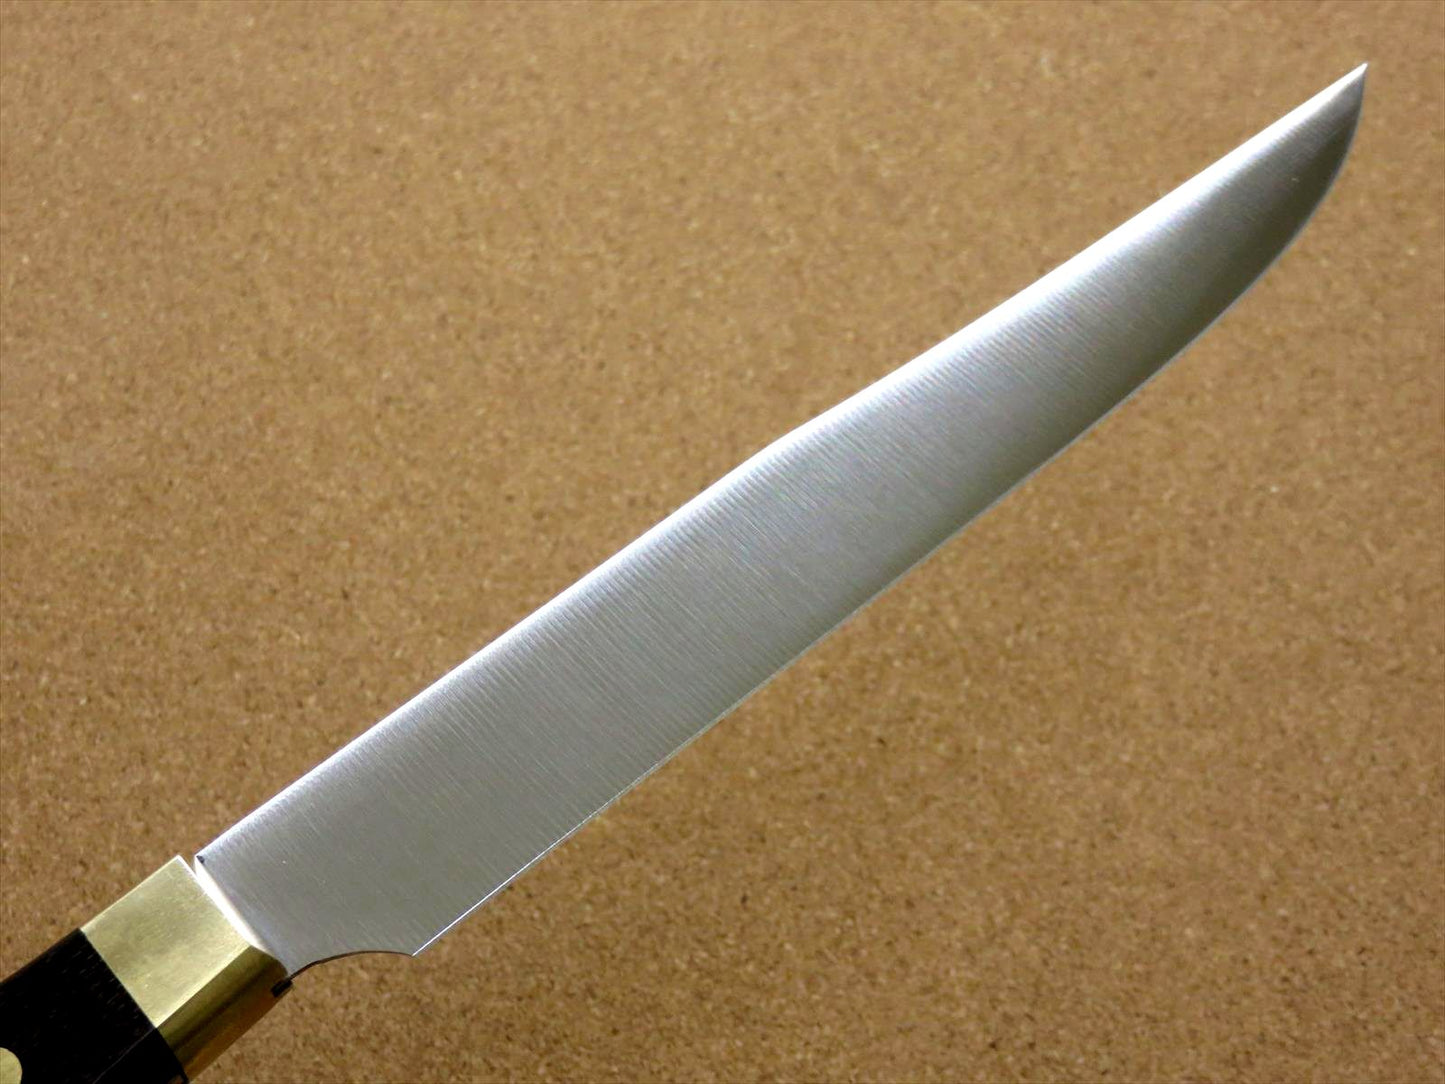 Japanese Kitchen Carving Knife 200mm 7.9 inch Slicing meat Roast beef SEKI JAPAN